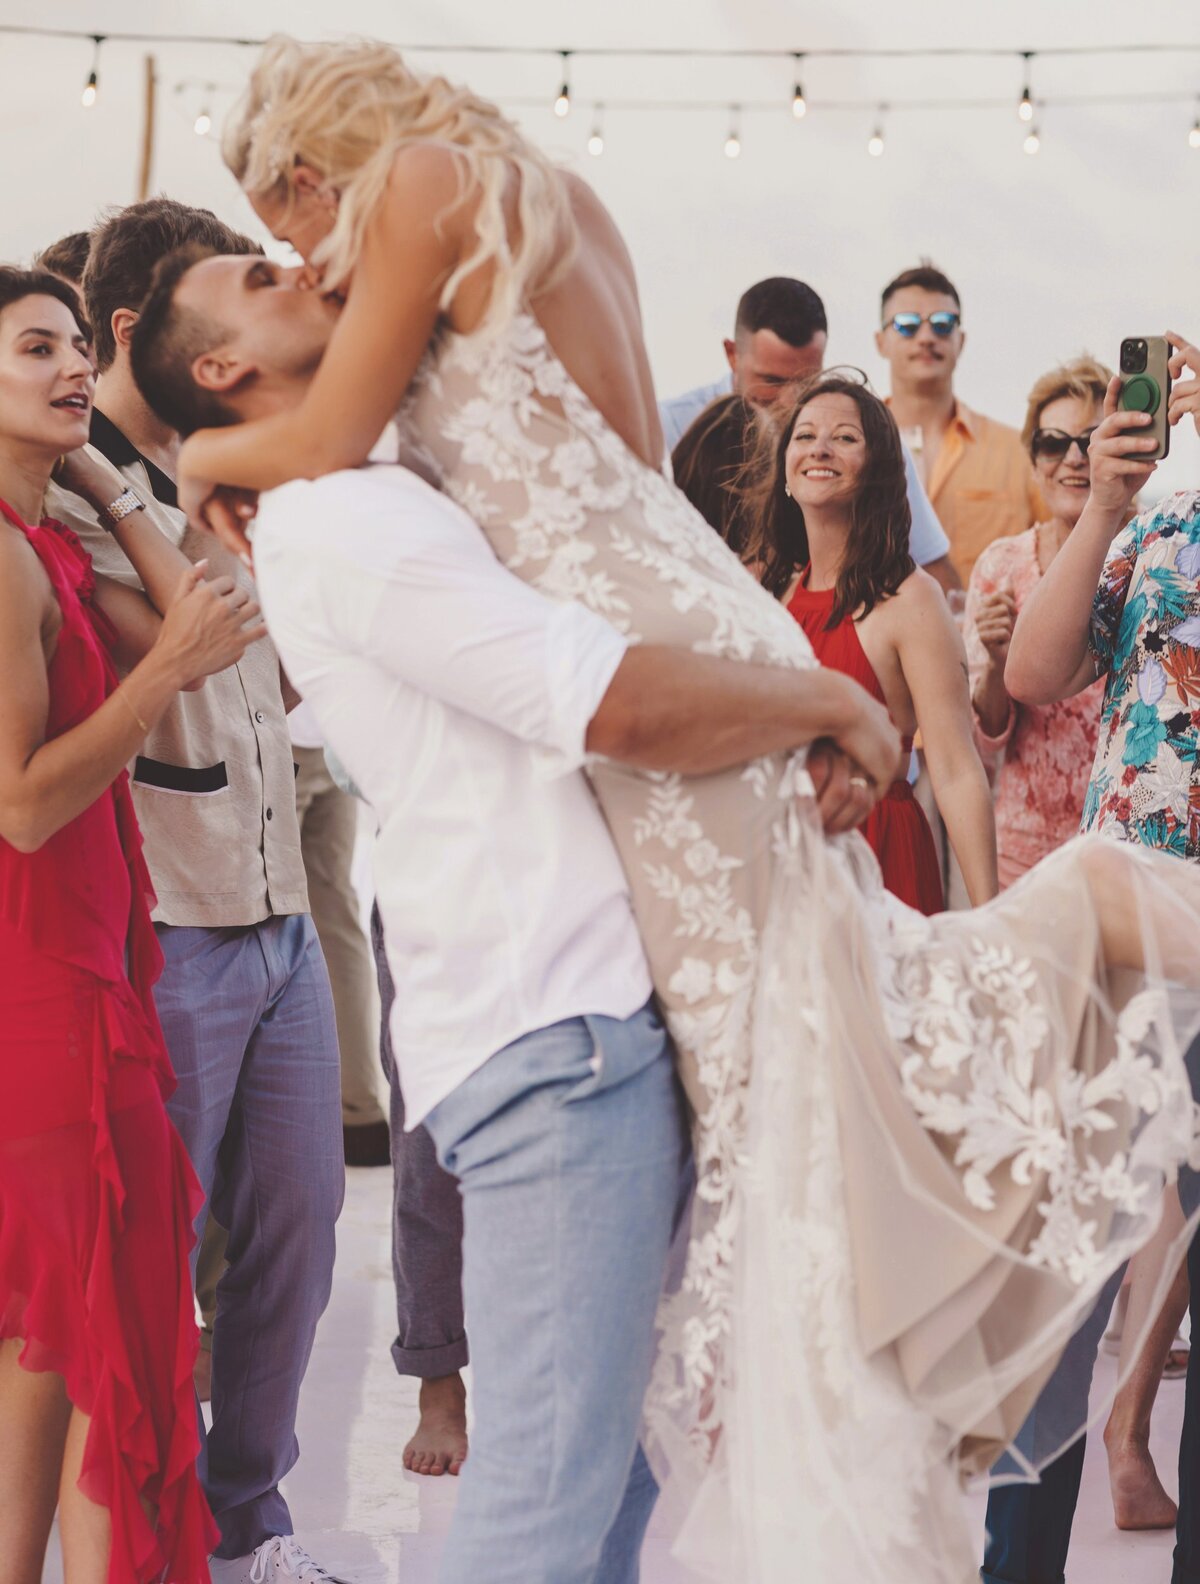 Groom lifting bride on dance floor at wedding in Cancun